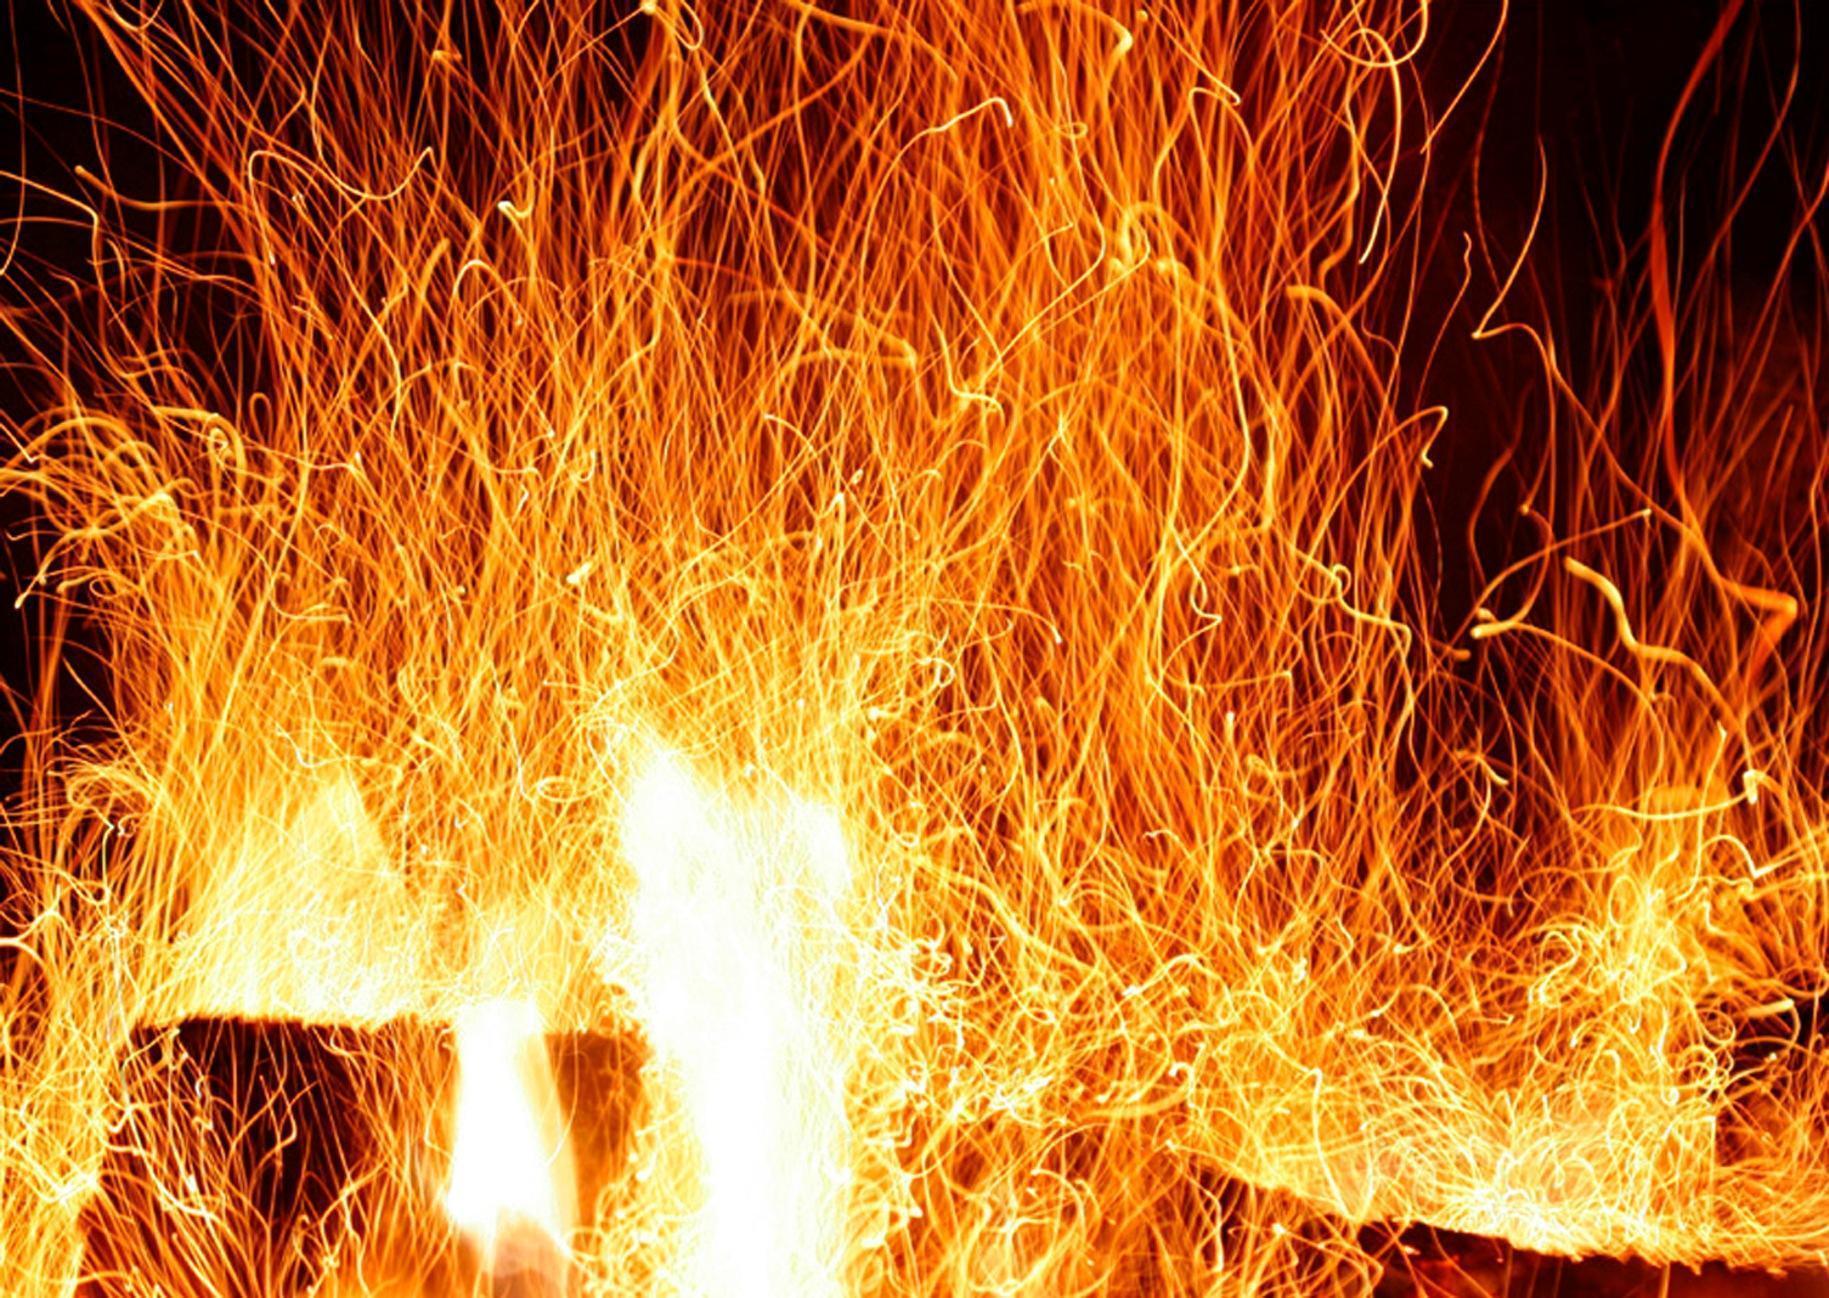 Fire flame image free desktop background wallpaper image